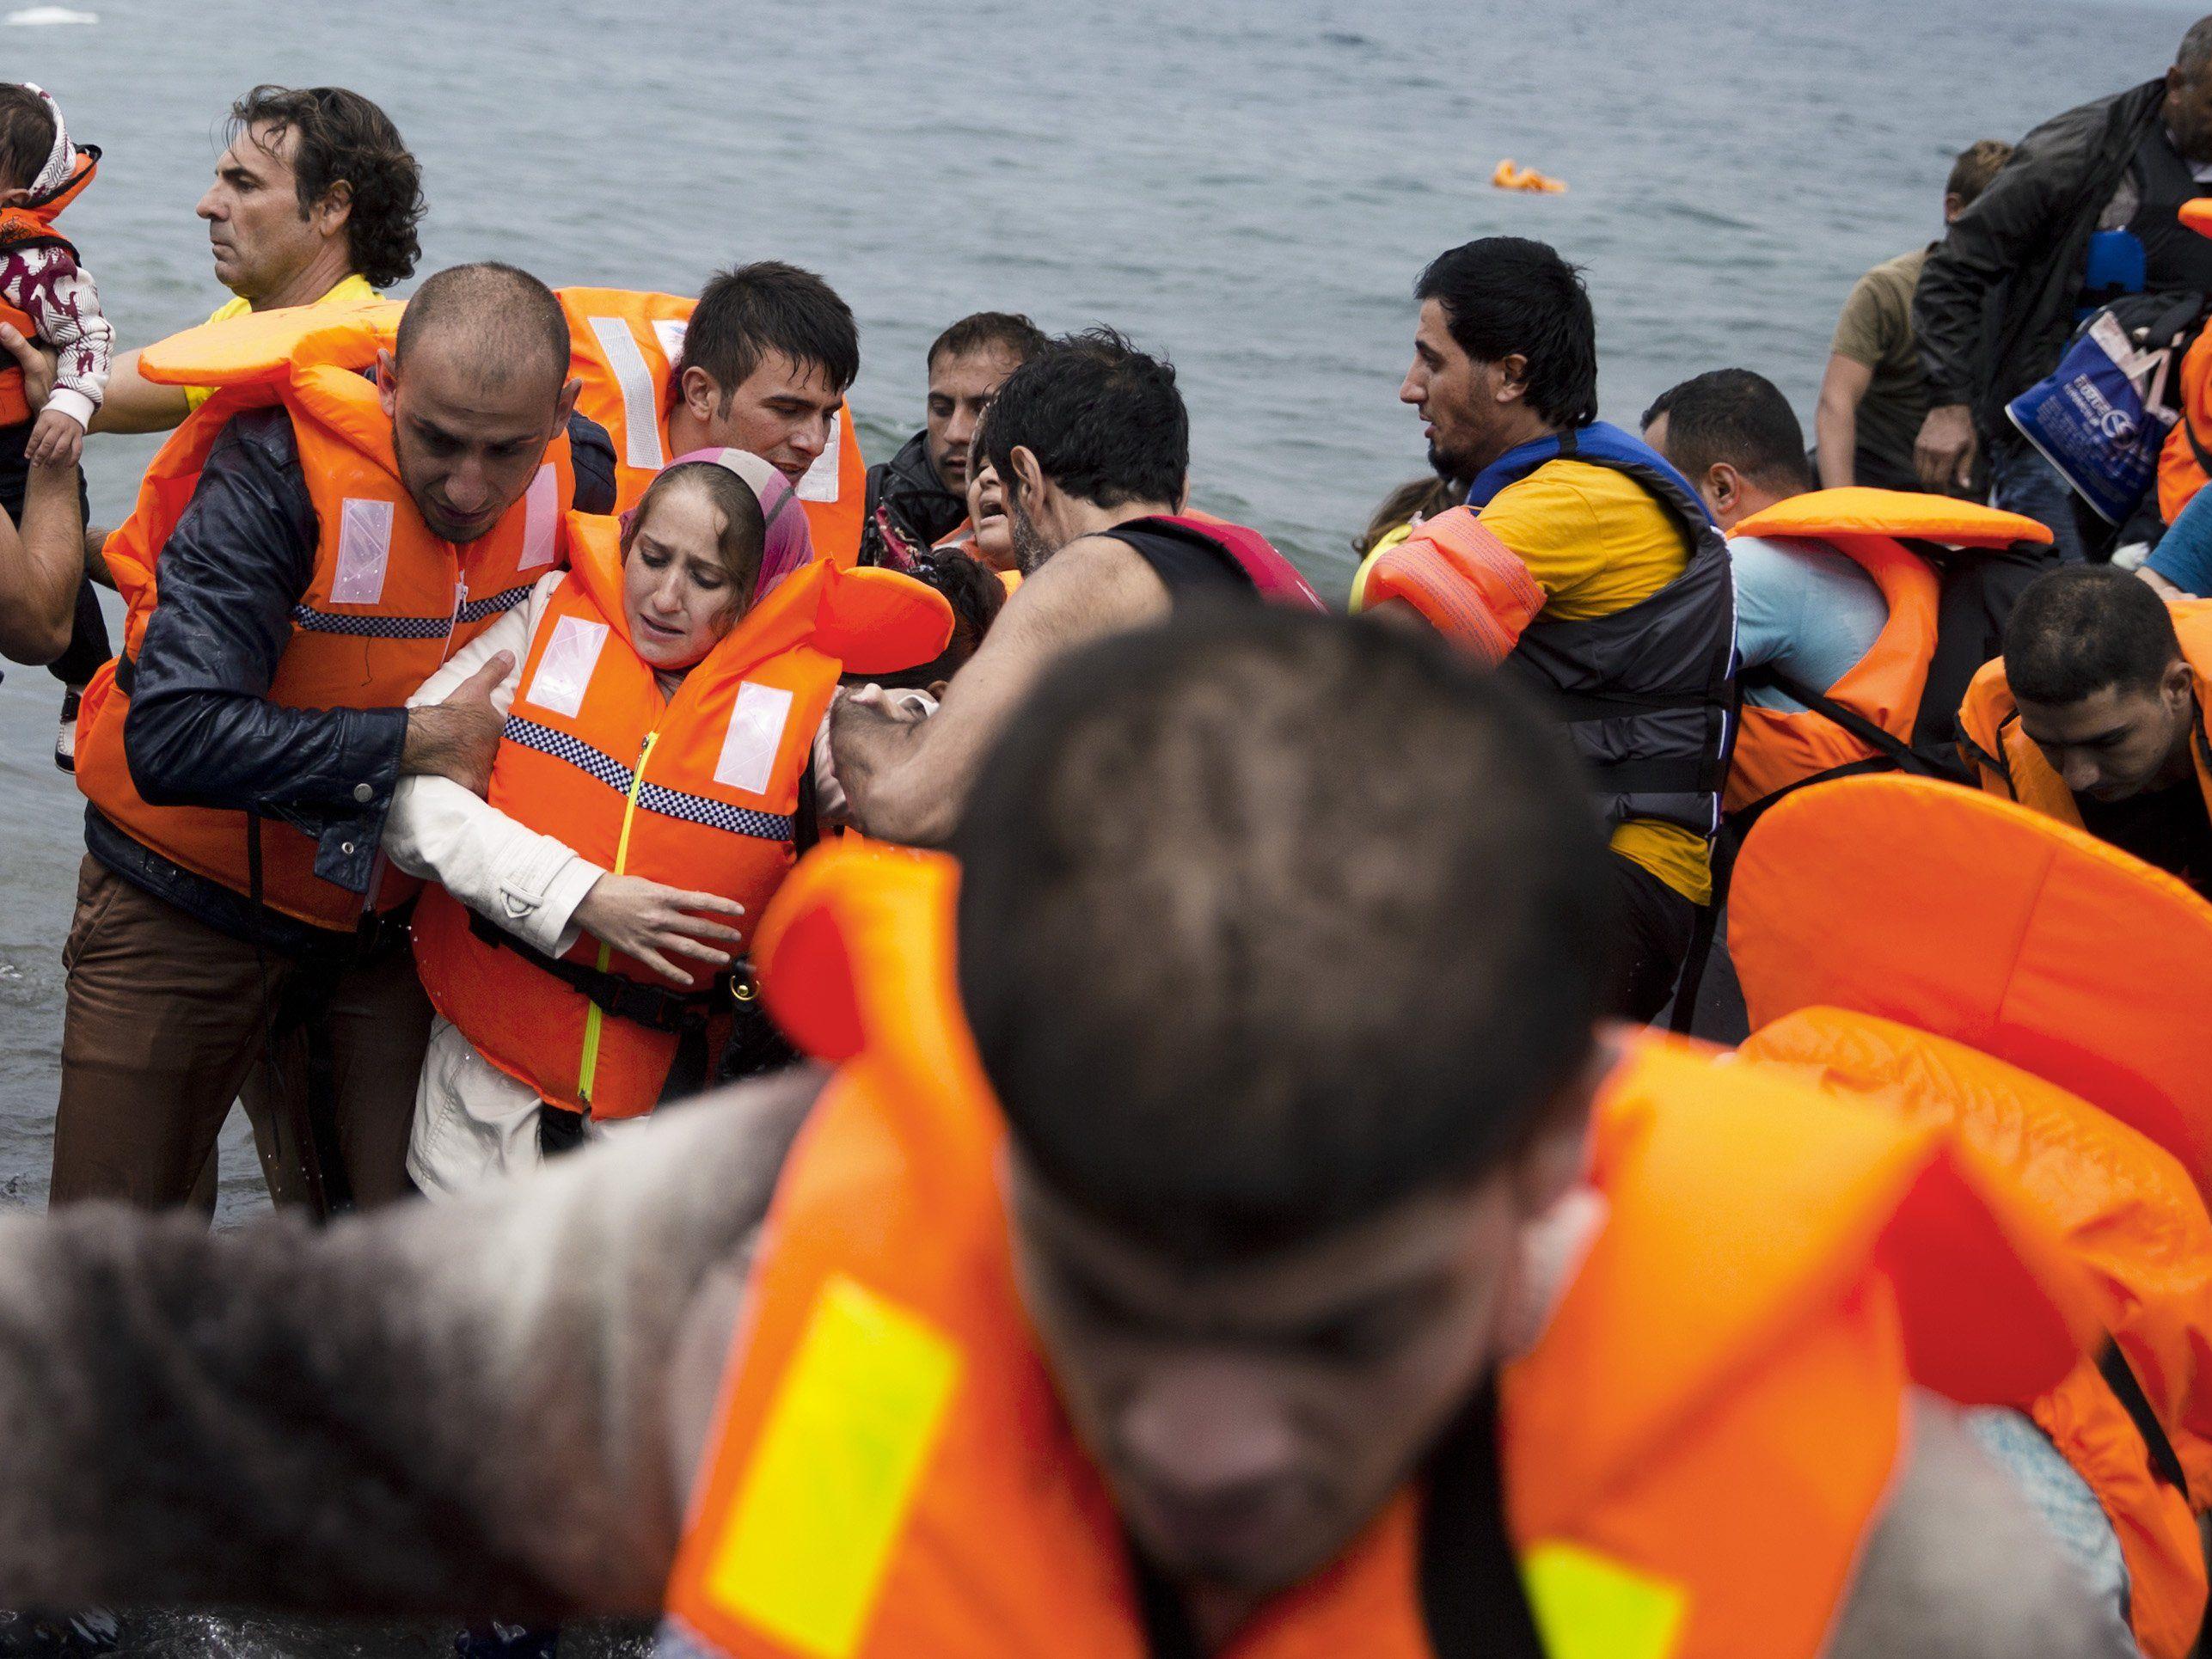 Harte Fronten vor EU-Krisentreffen zu Flüchtlingen.